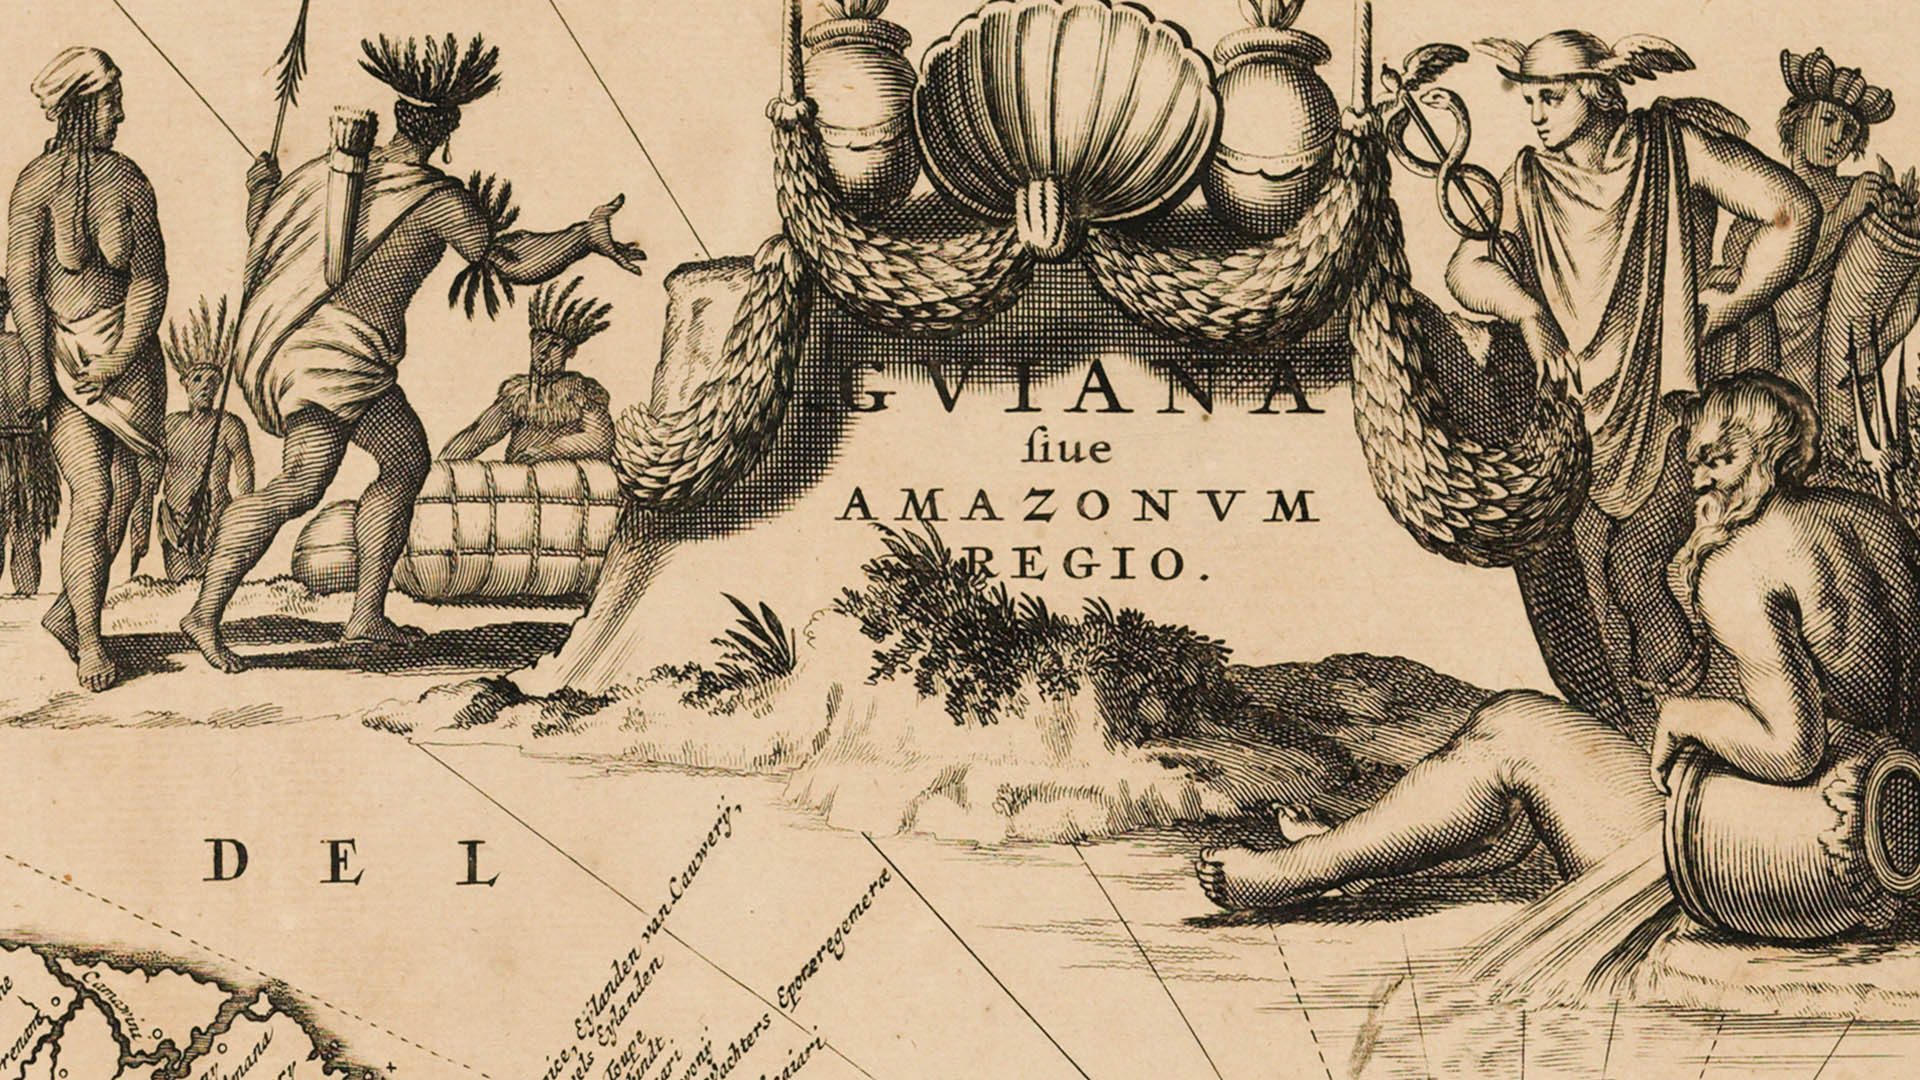 Detalhe de Guiana fiue Amazonum régio, c.1671, de John Ogilby, 1600-1676 (a partir de Arnoldus Montanus, 1625?-1683)